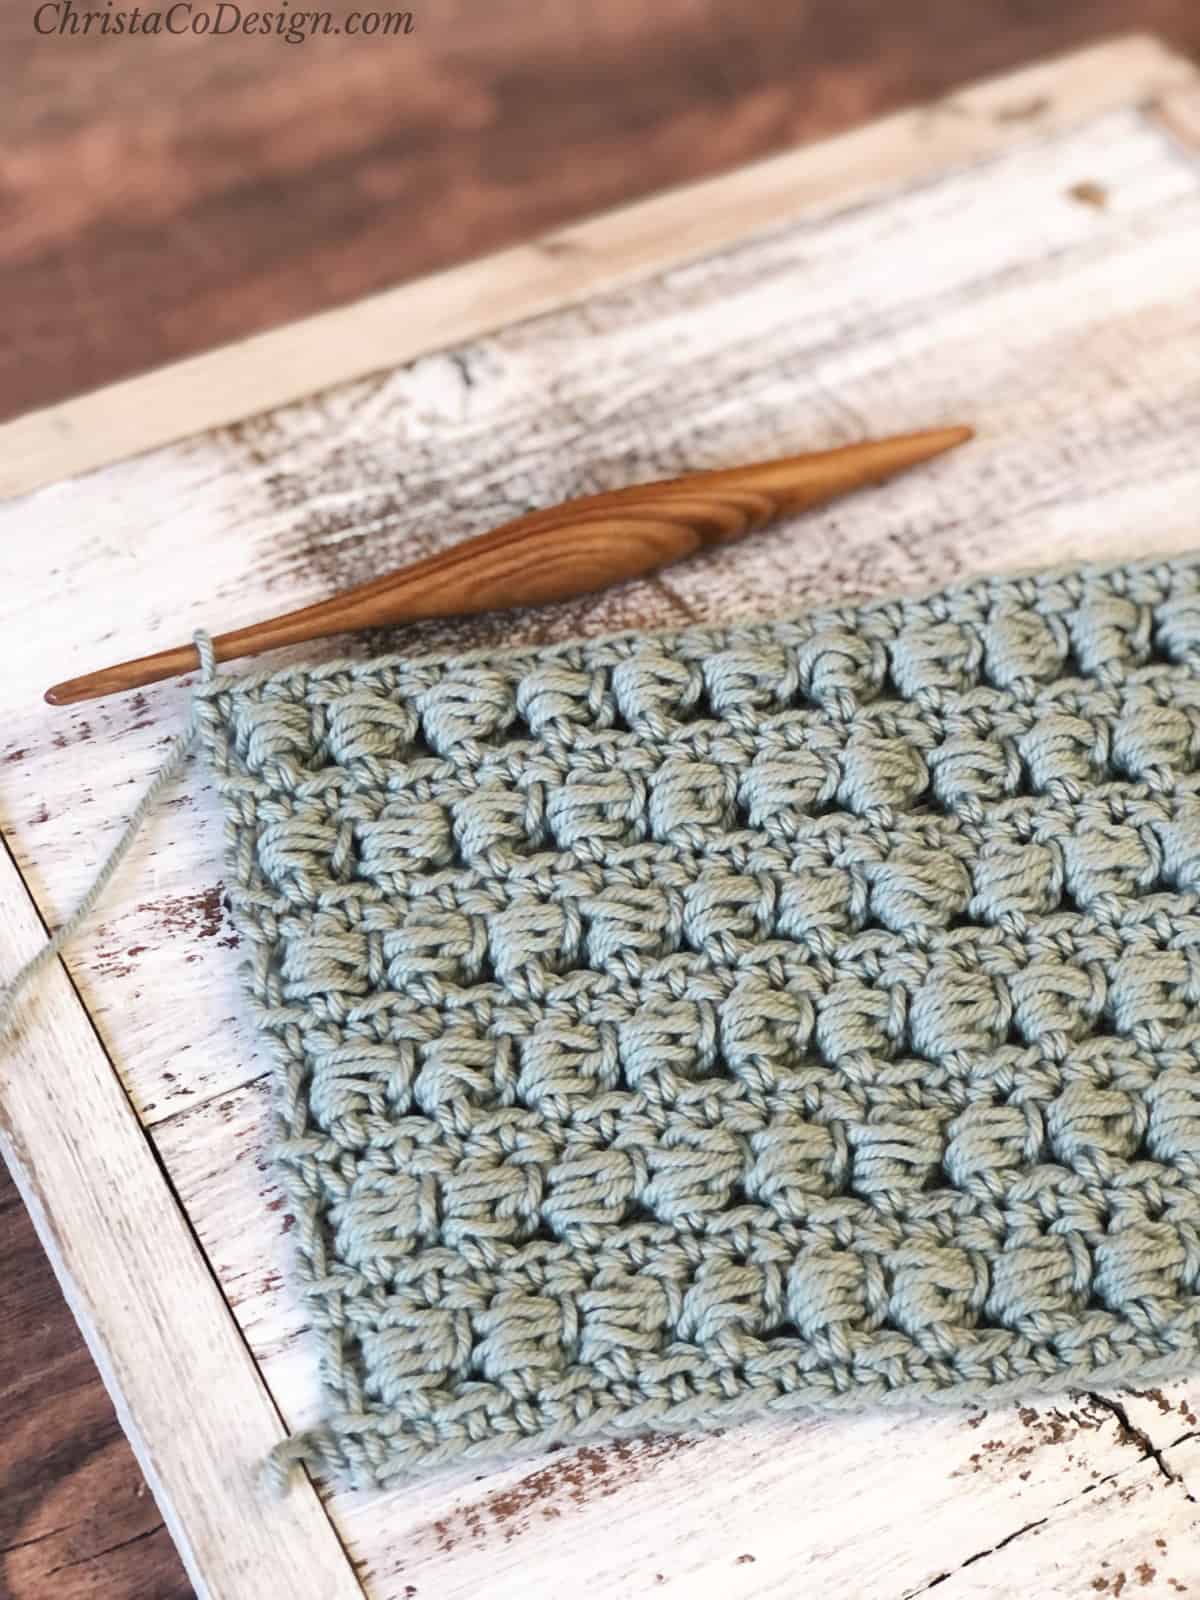 Crochet bead stitch in dishie yarn on hook.